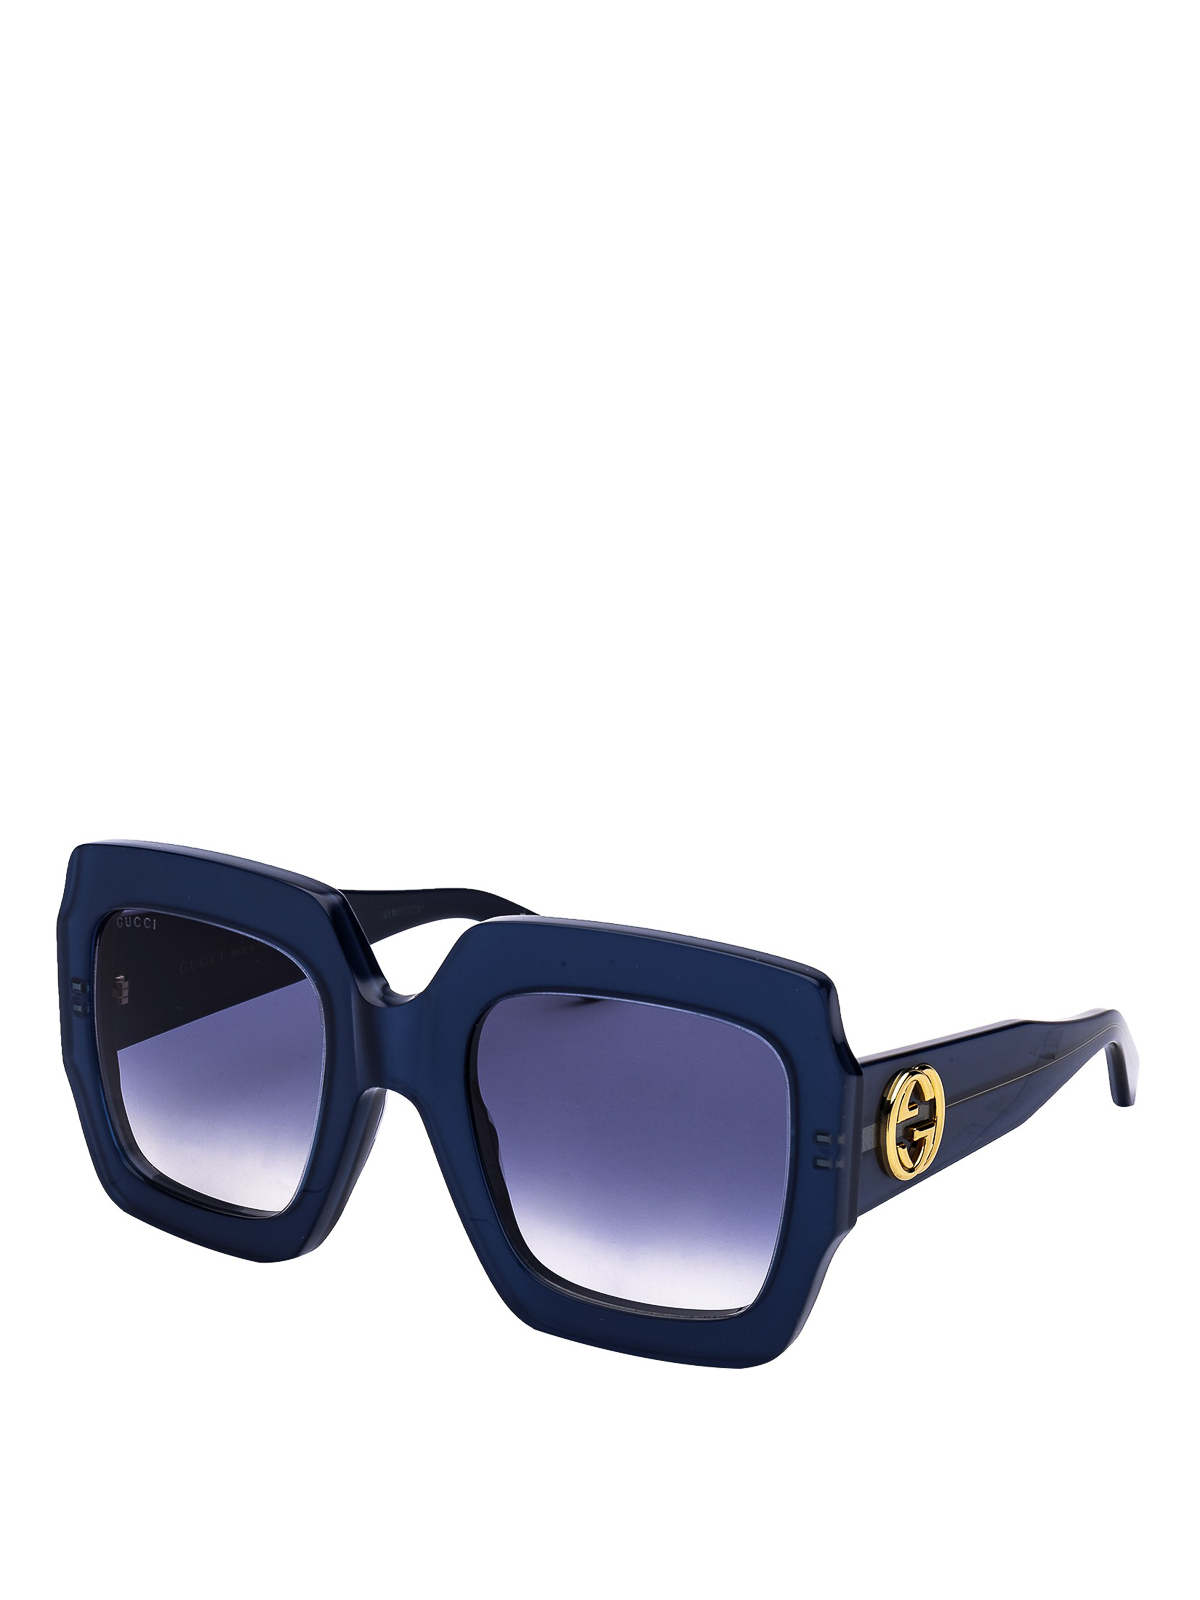 Gucci - Blue acetate square sunglasses 